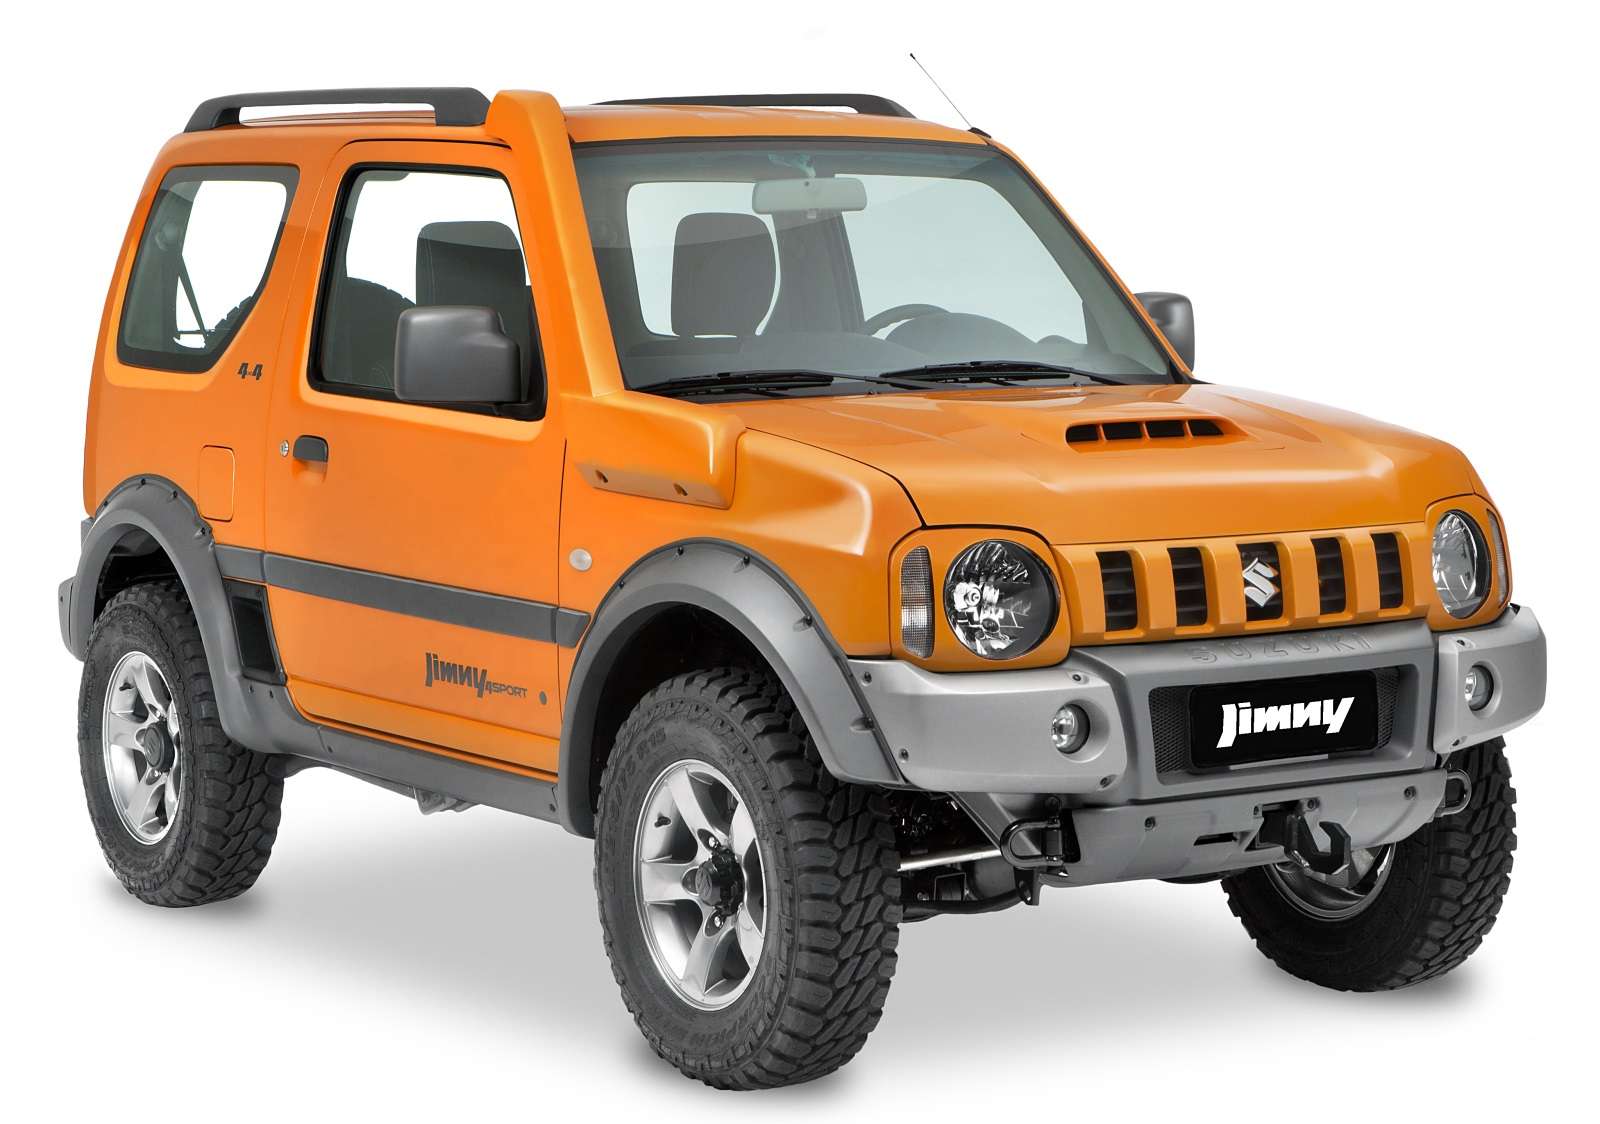 Avaliação: Suzuki Jimny